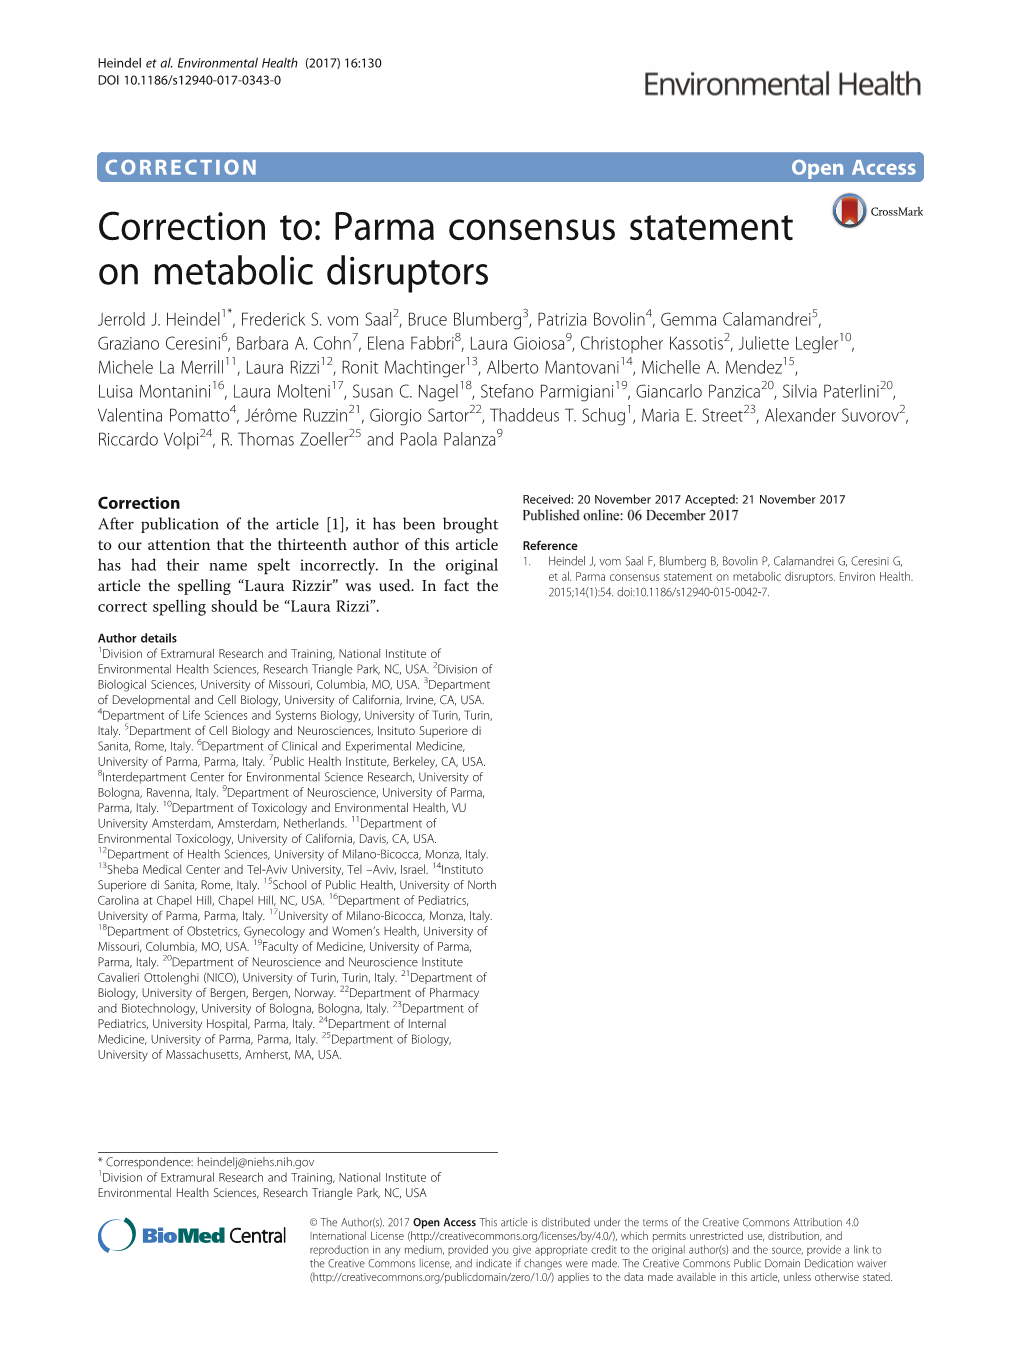 Correction To: Parma Consensus Statement on Metabolic Disruptors